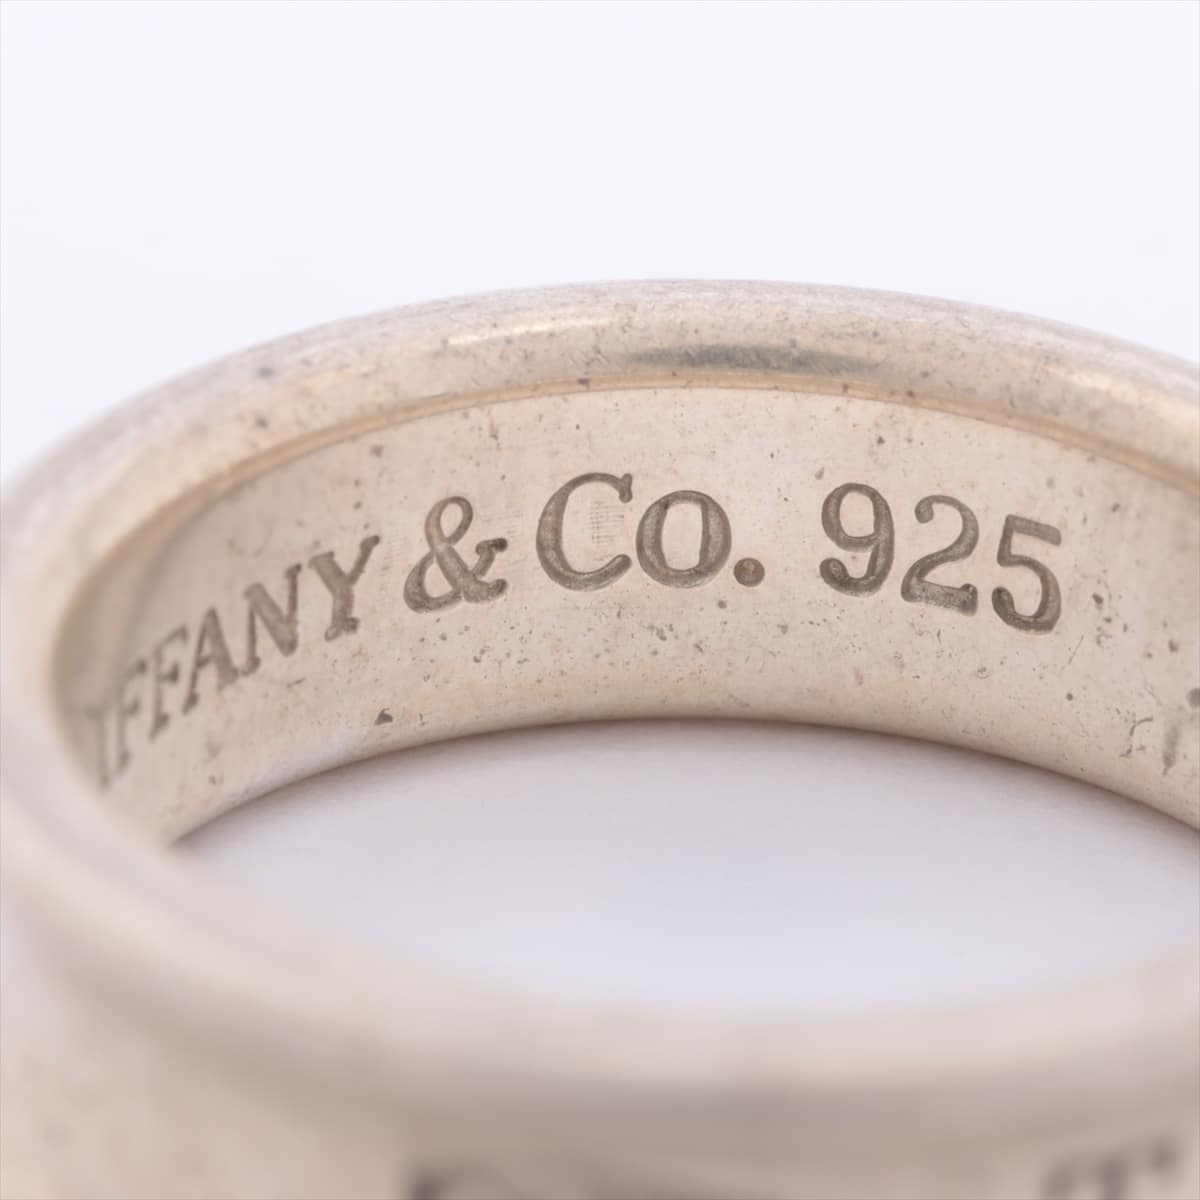 Tiffany 1837 Narrow rings 925 7.9g Silver